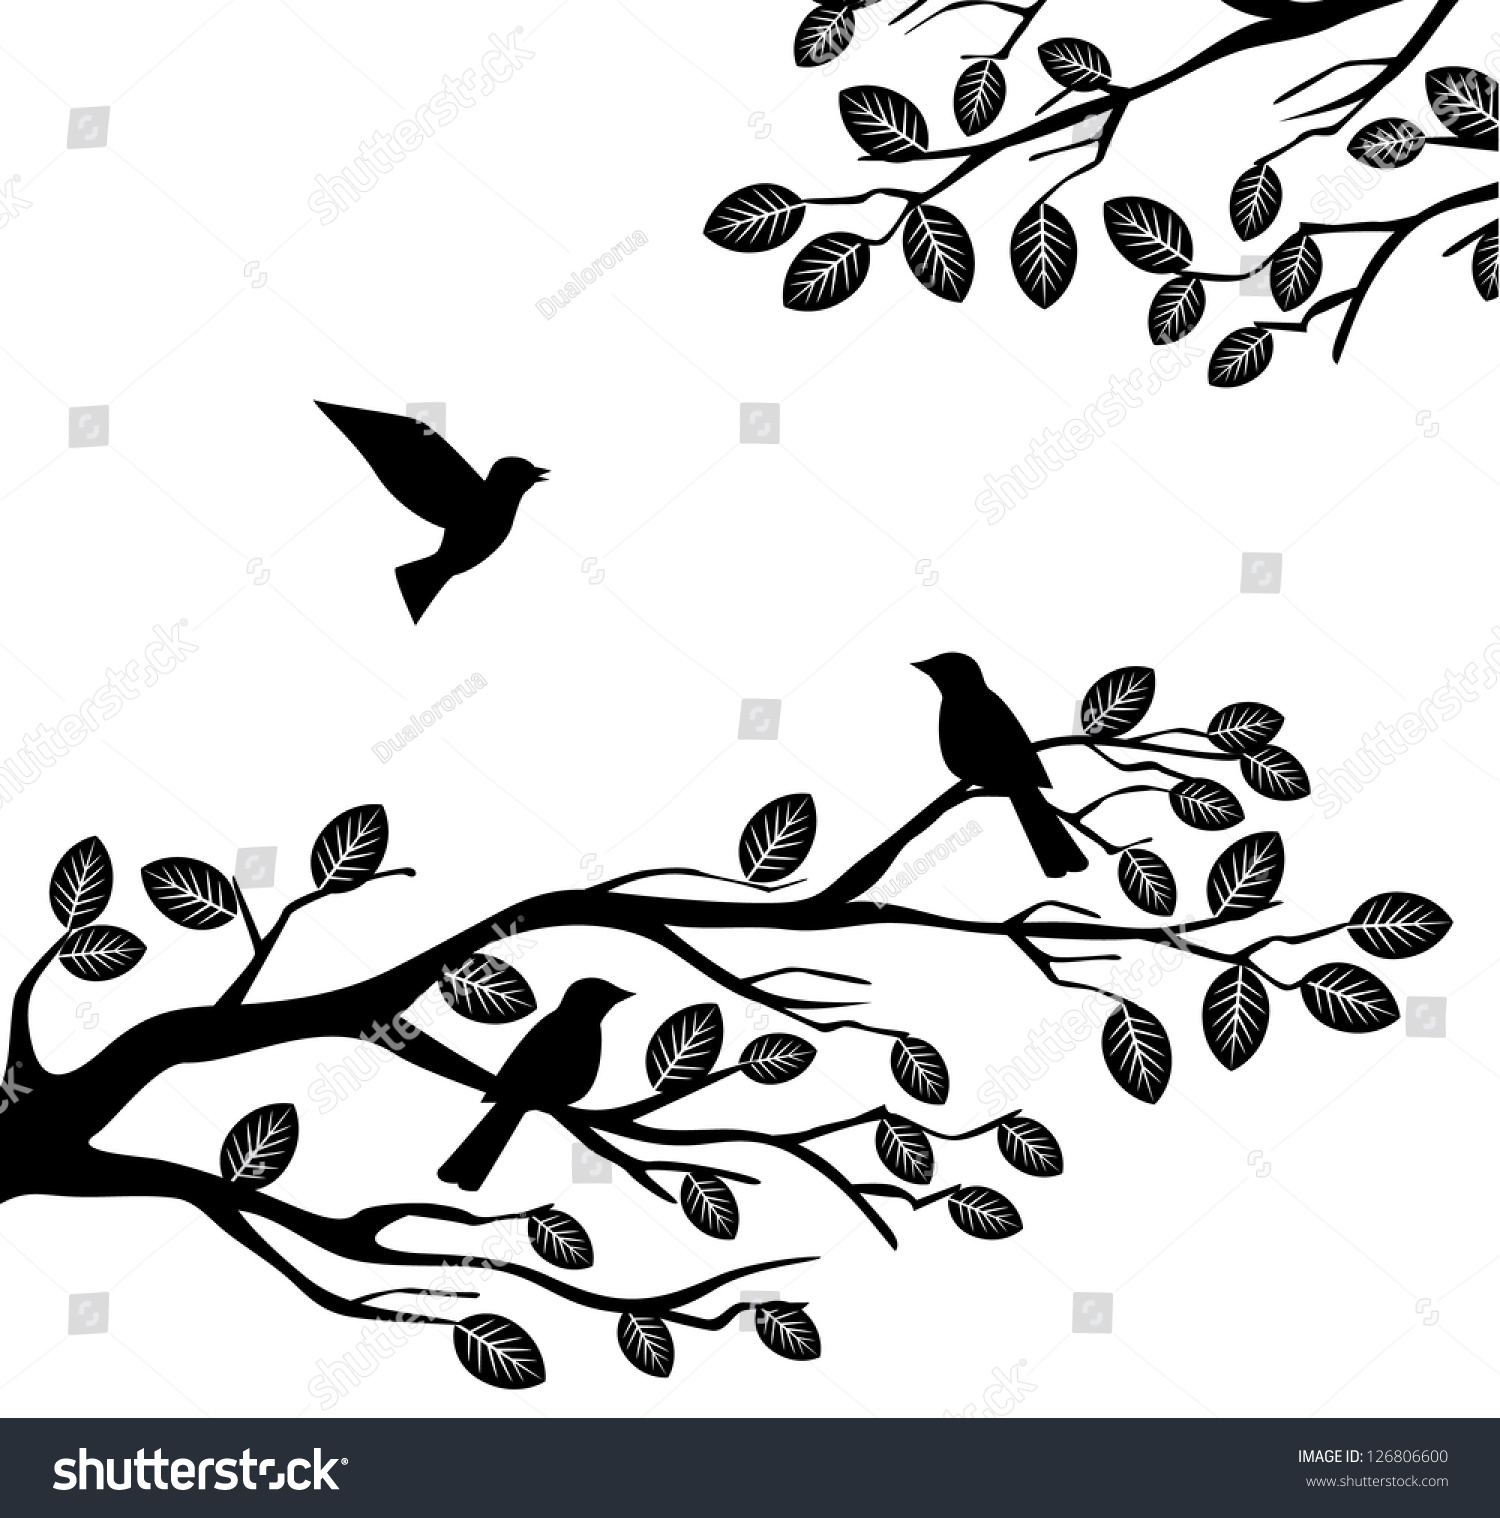 Tree Bird Flying Stock Vector 126806600 - Shutterstock